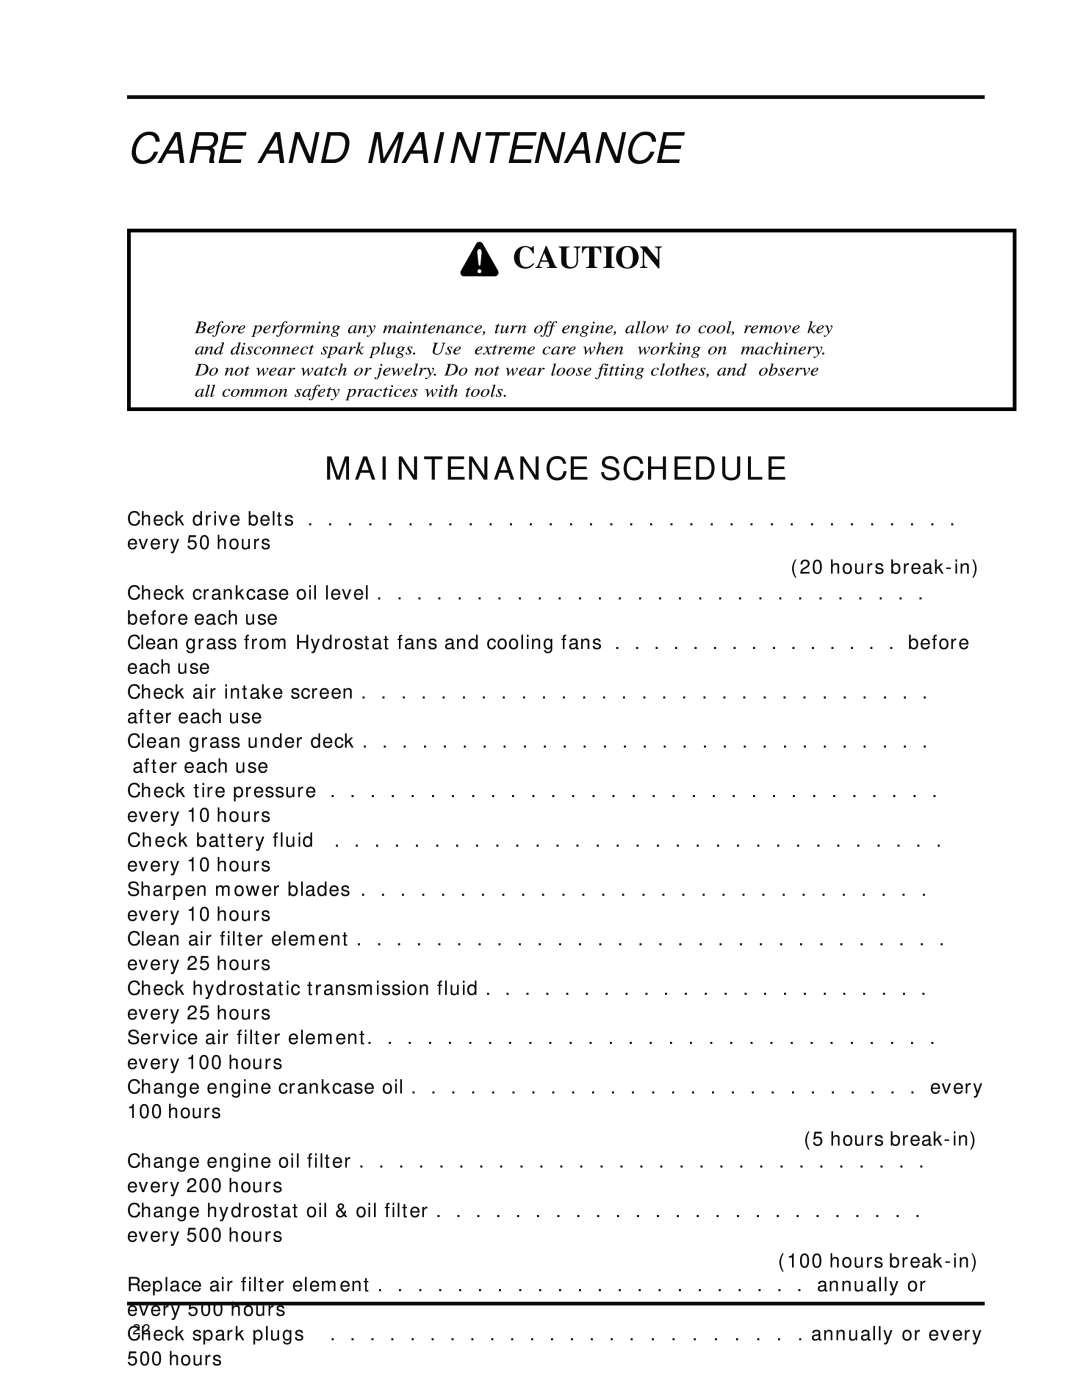 Dixon ZTR 8025 manual Care And Maintenance, Maintenance Schedule 